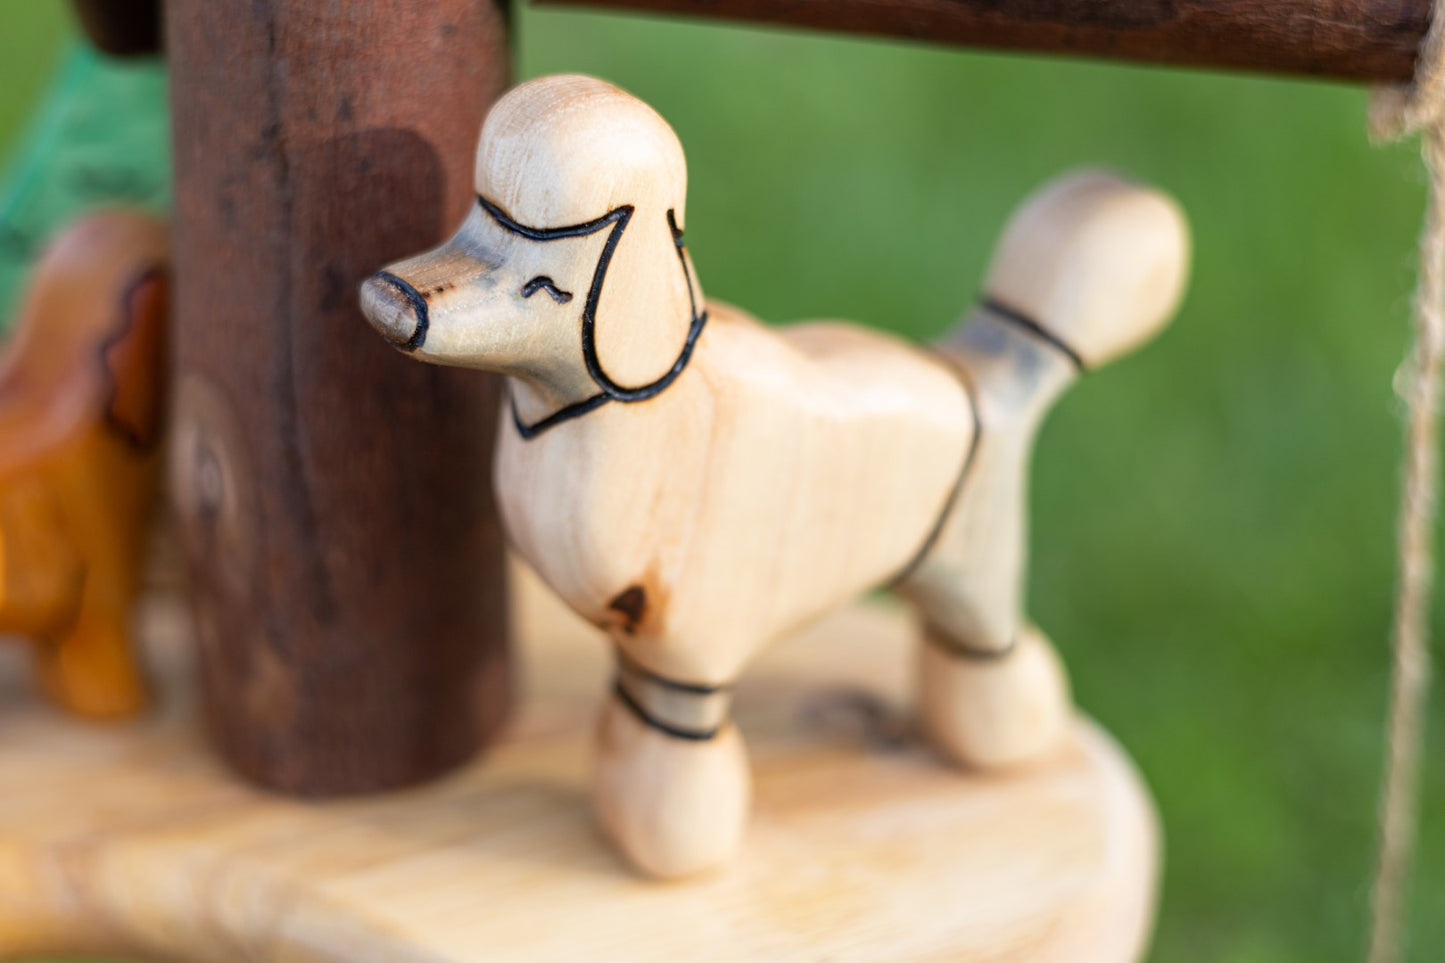 Wooden Fancy Poodle Toy Dog